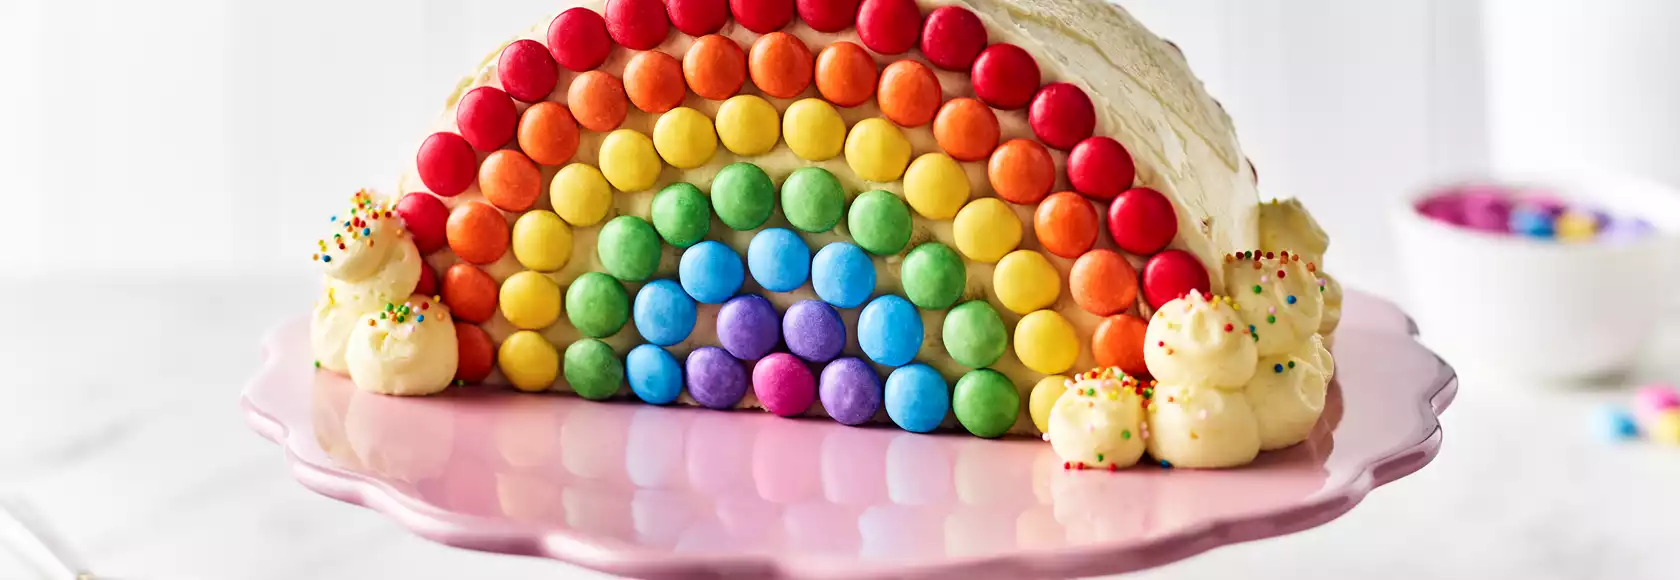 Surprise Skittles rainbow cake | Sainsbury`s Magazine